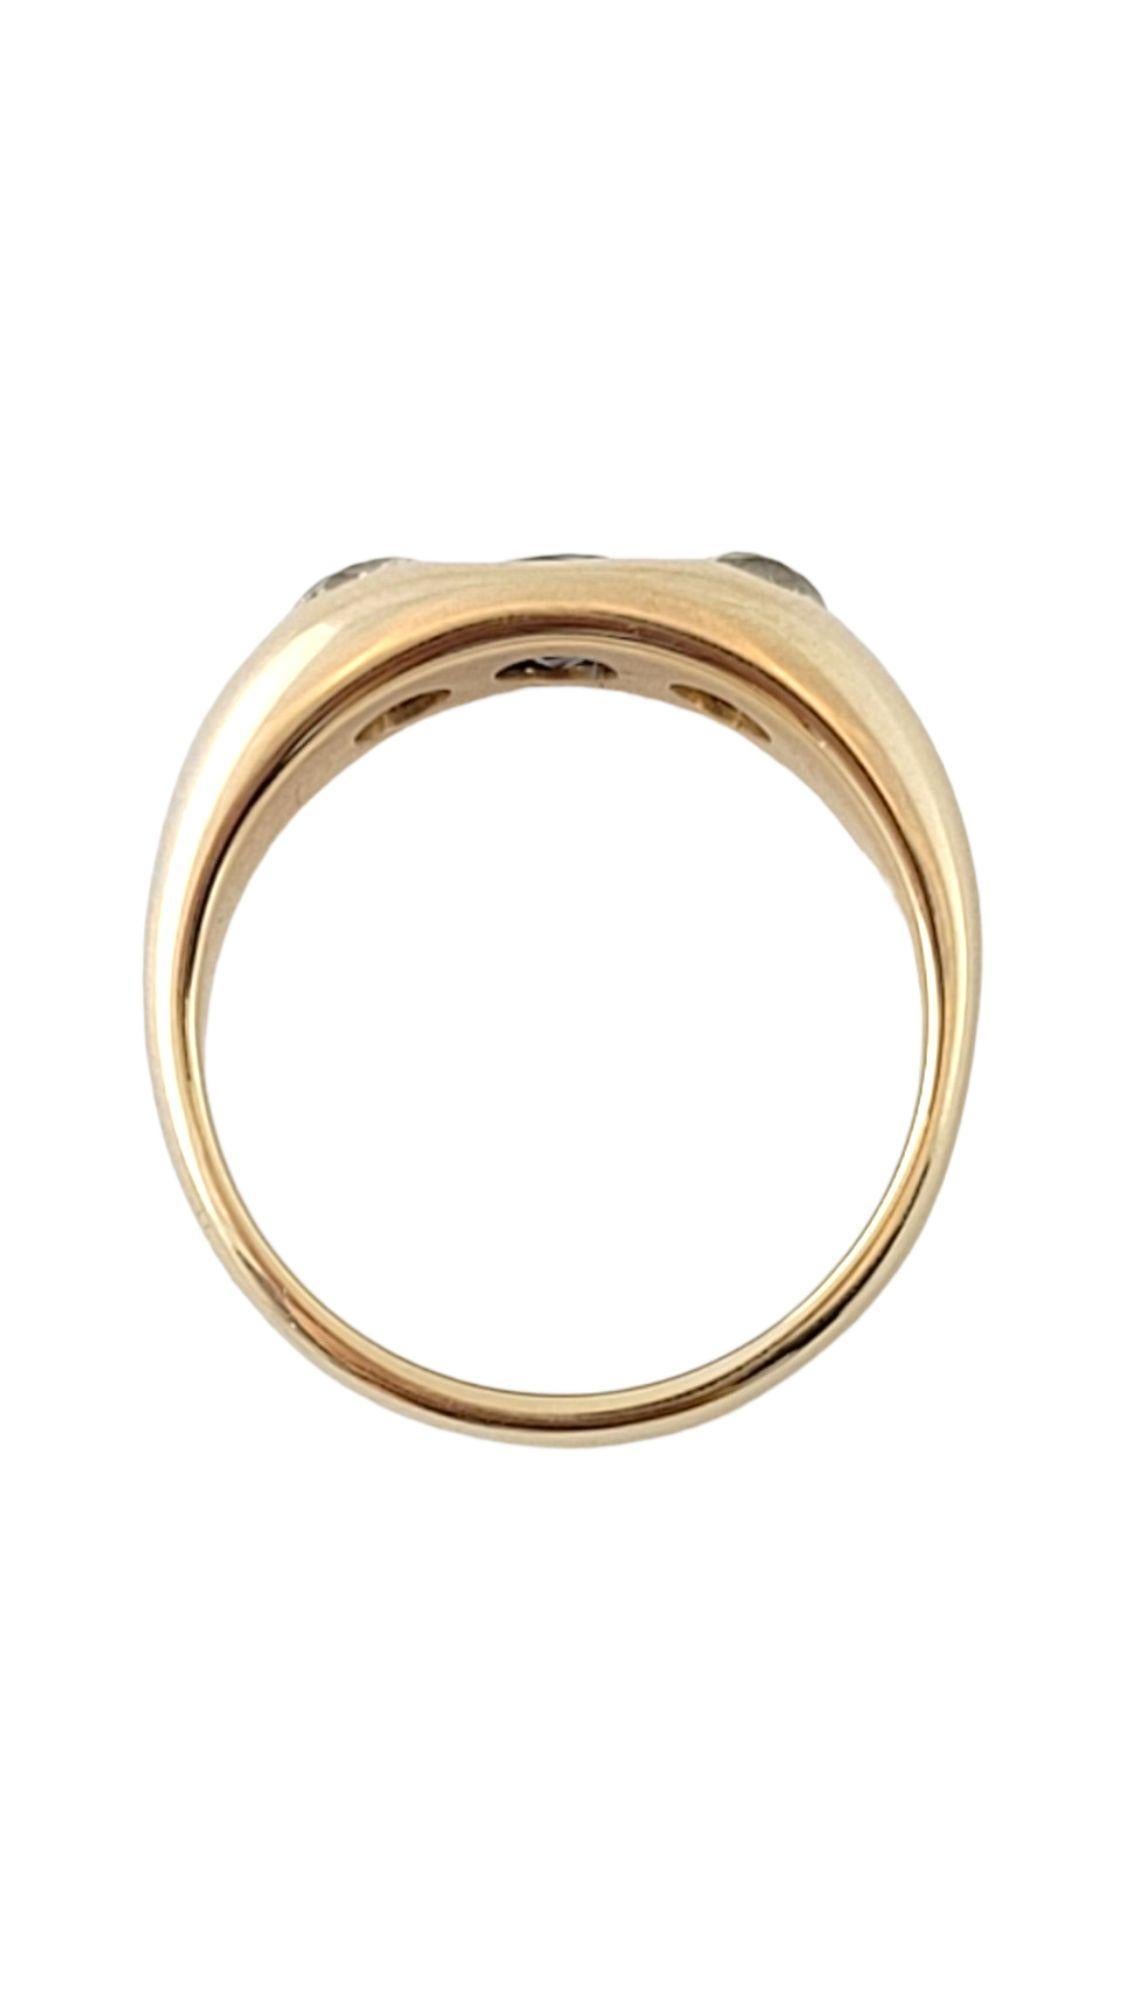 10k gold sapphire ring